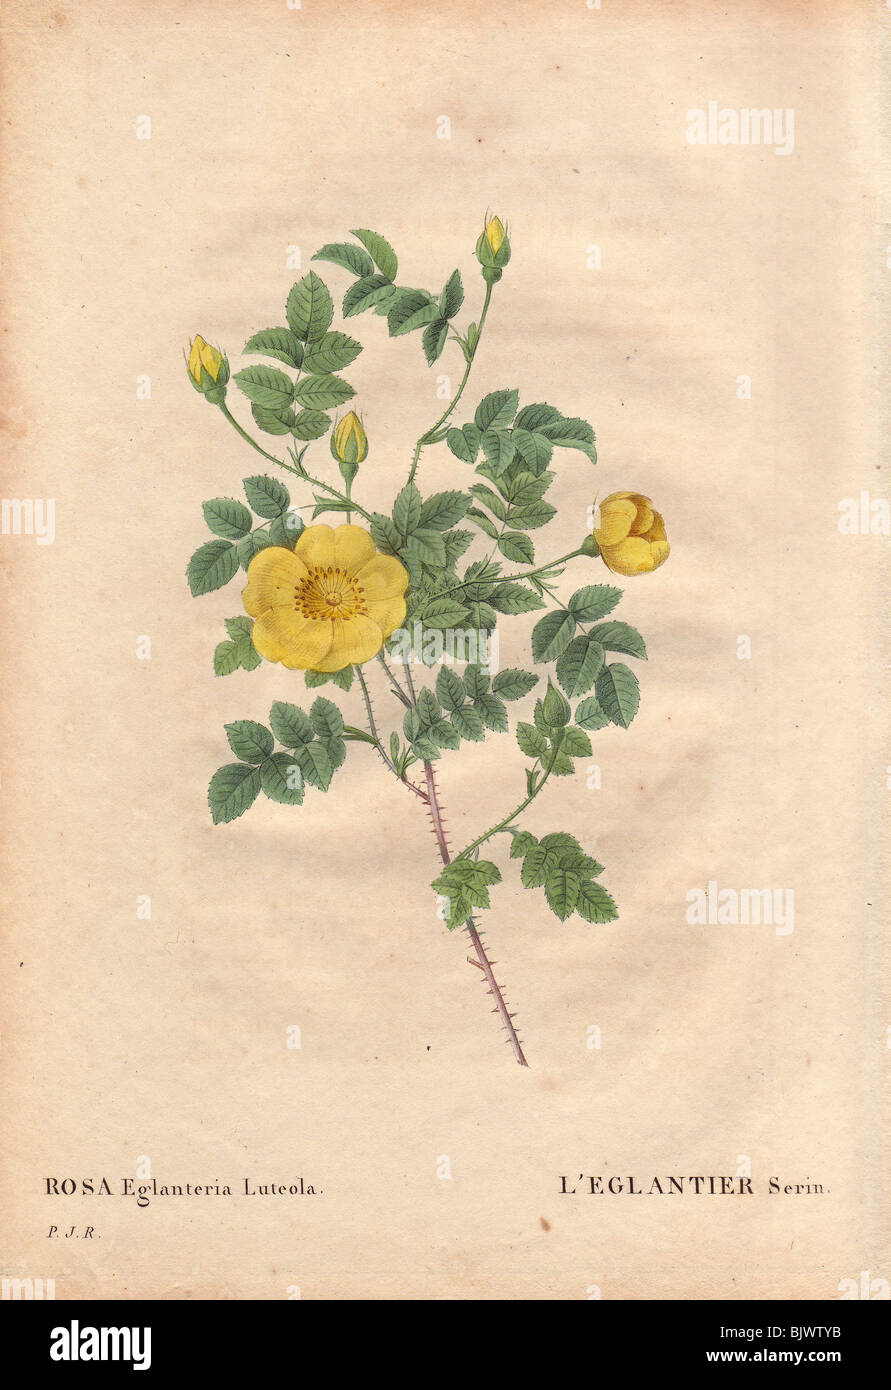 Vivid canary yellow Lutea Maxima rose (Rosa eglanteria luteola). L'Eglantier serin. Stock Photo